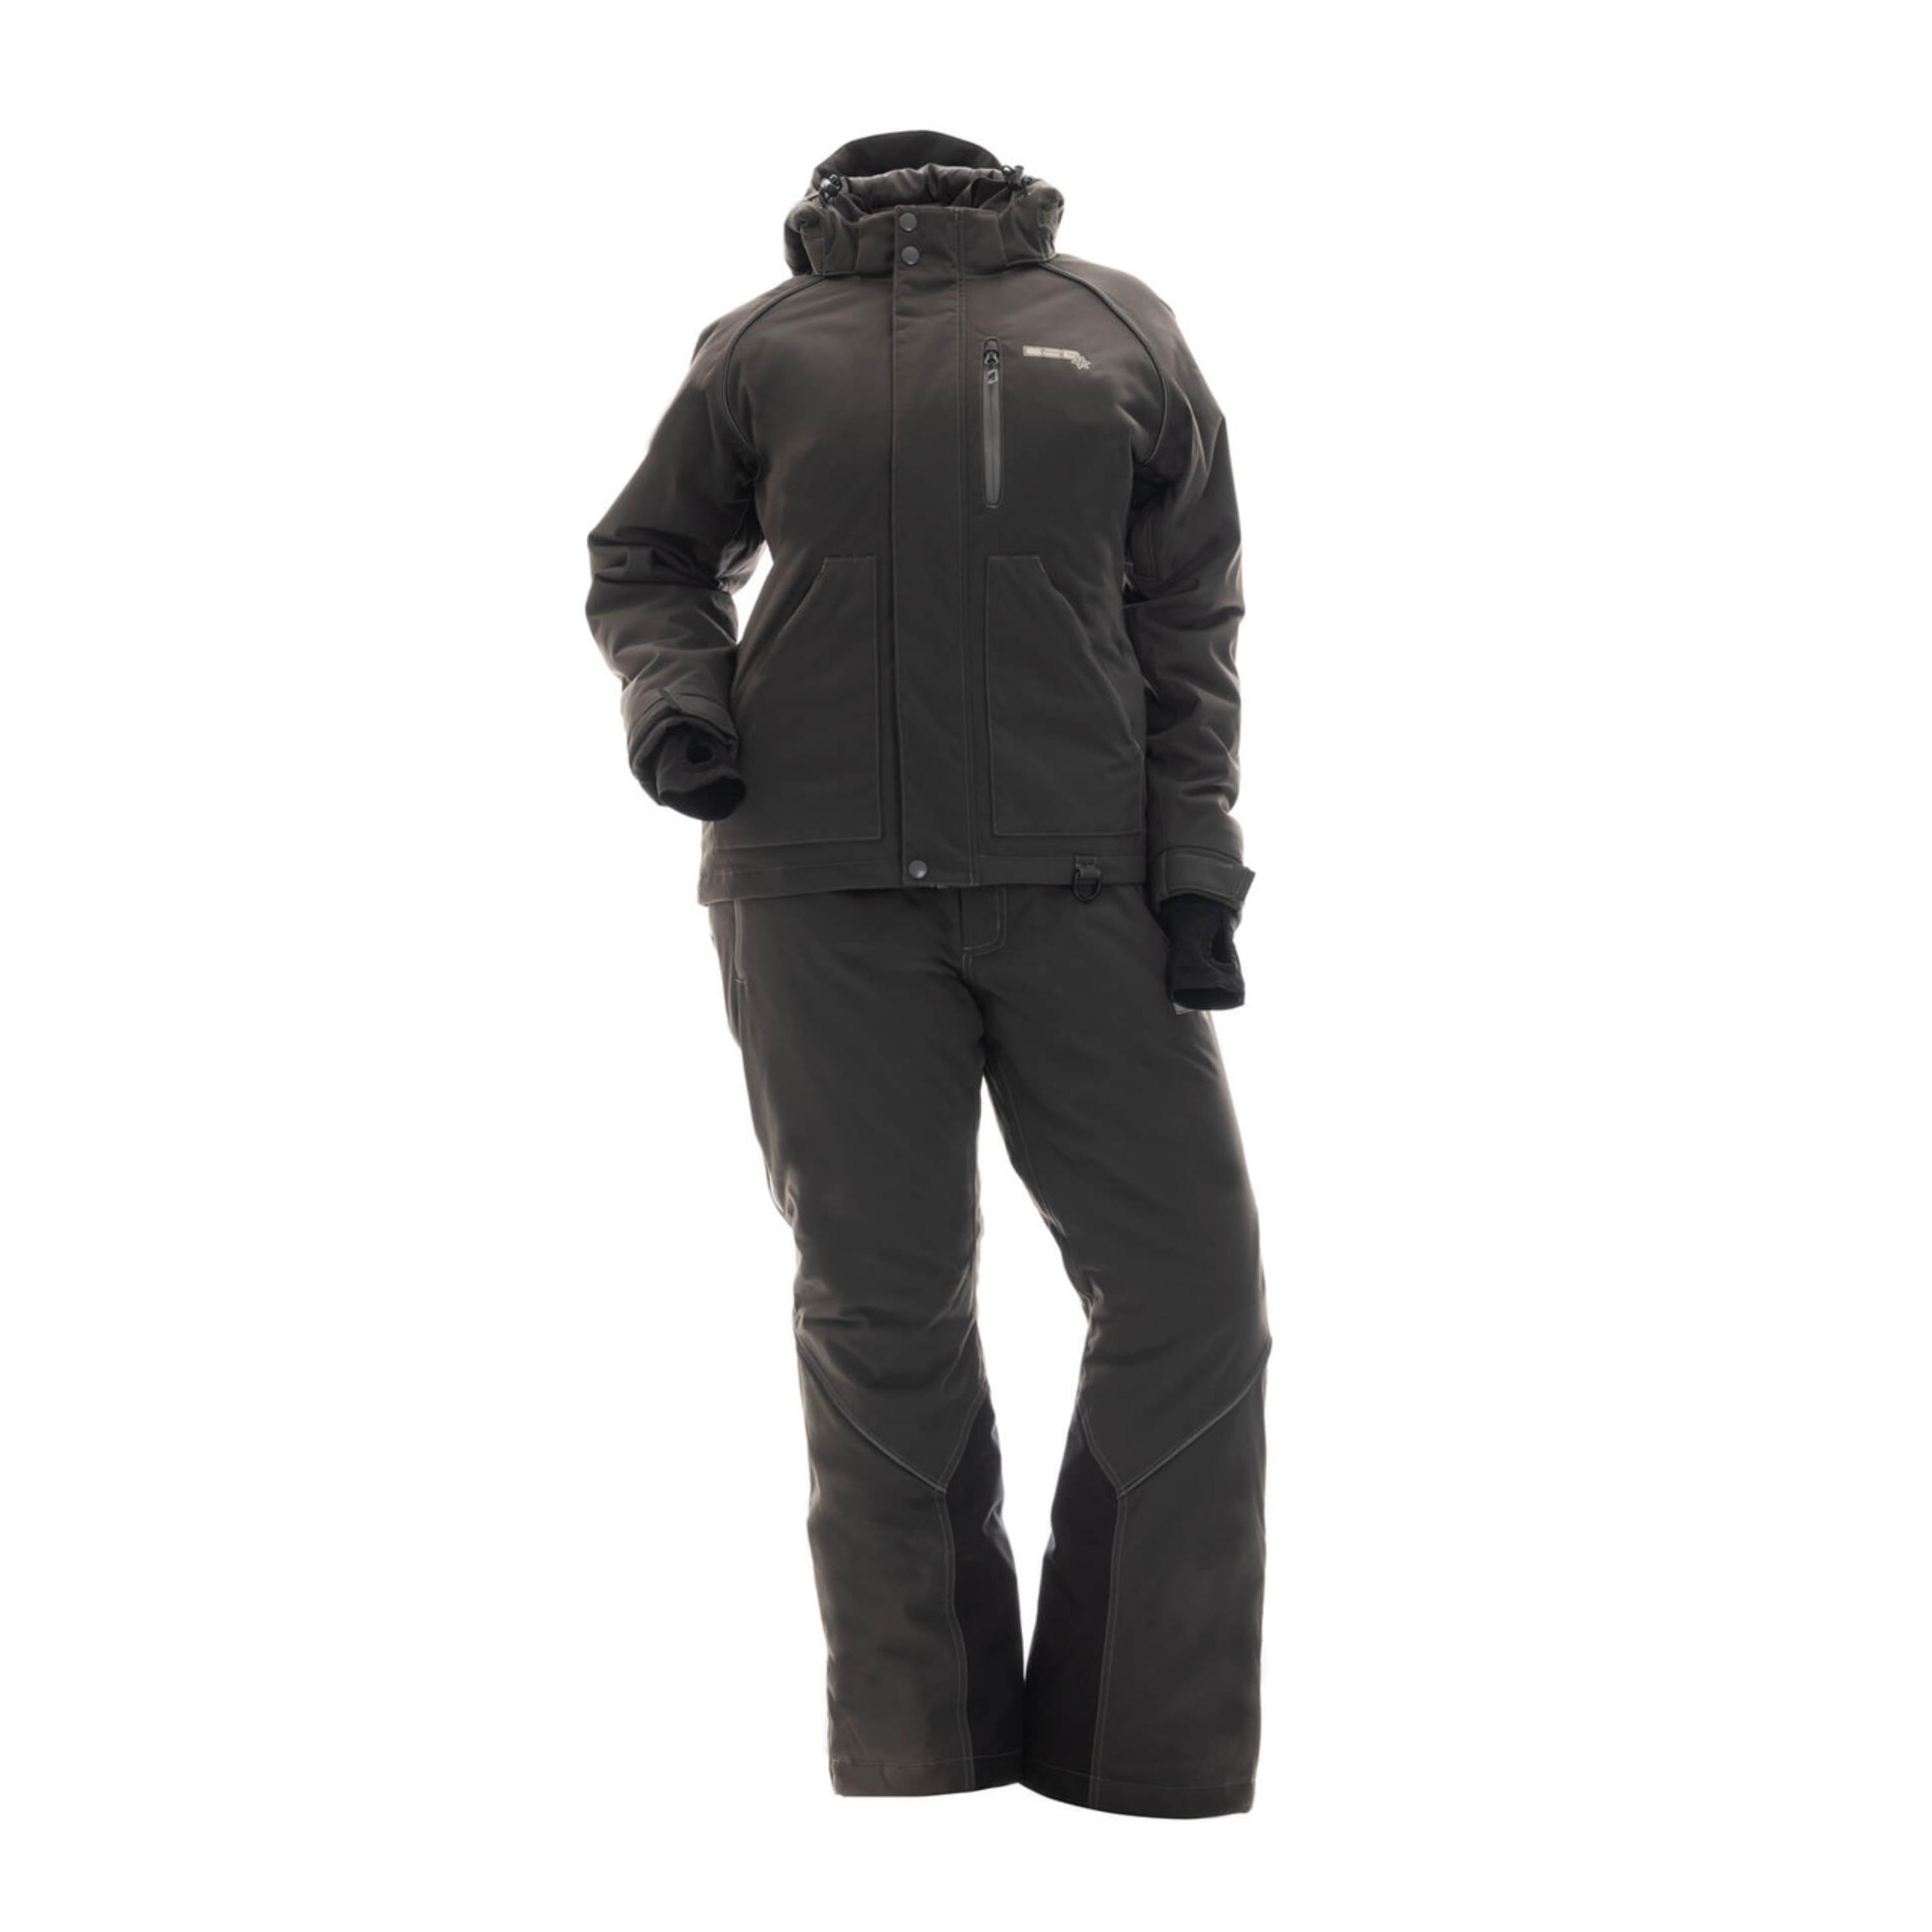 Waterproof Snow Bib | Snow Pants with Straps & Drop Seat